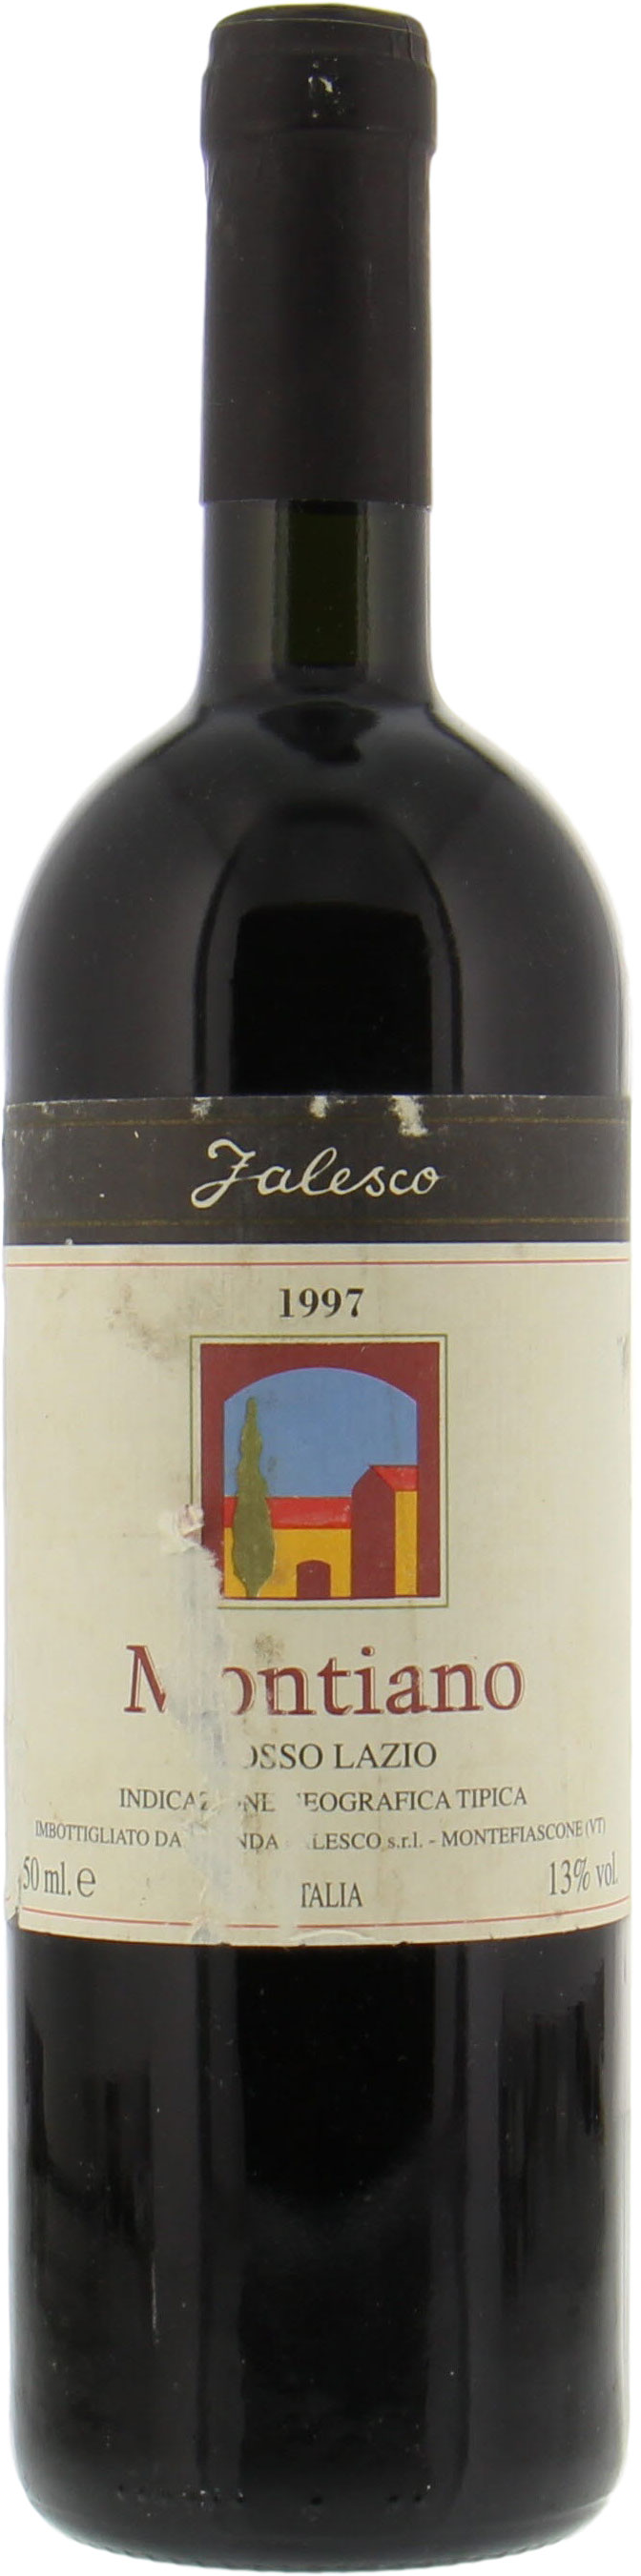 Falesco - Montiano 1997 Perfect